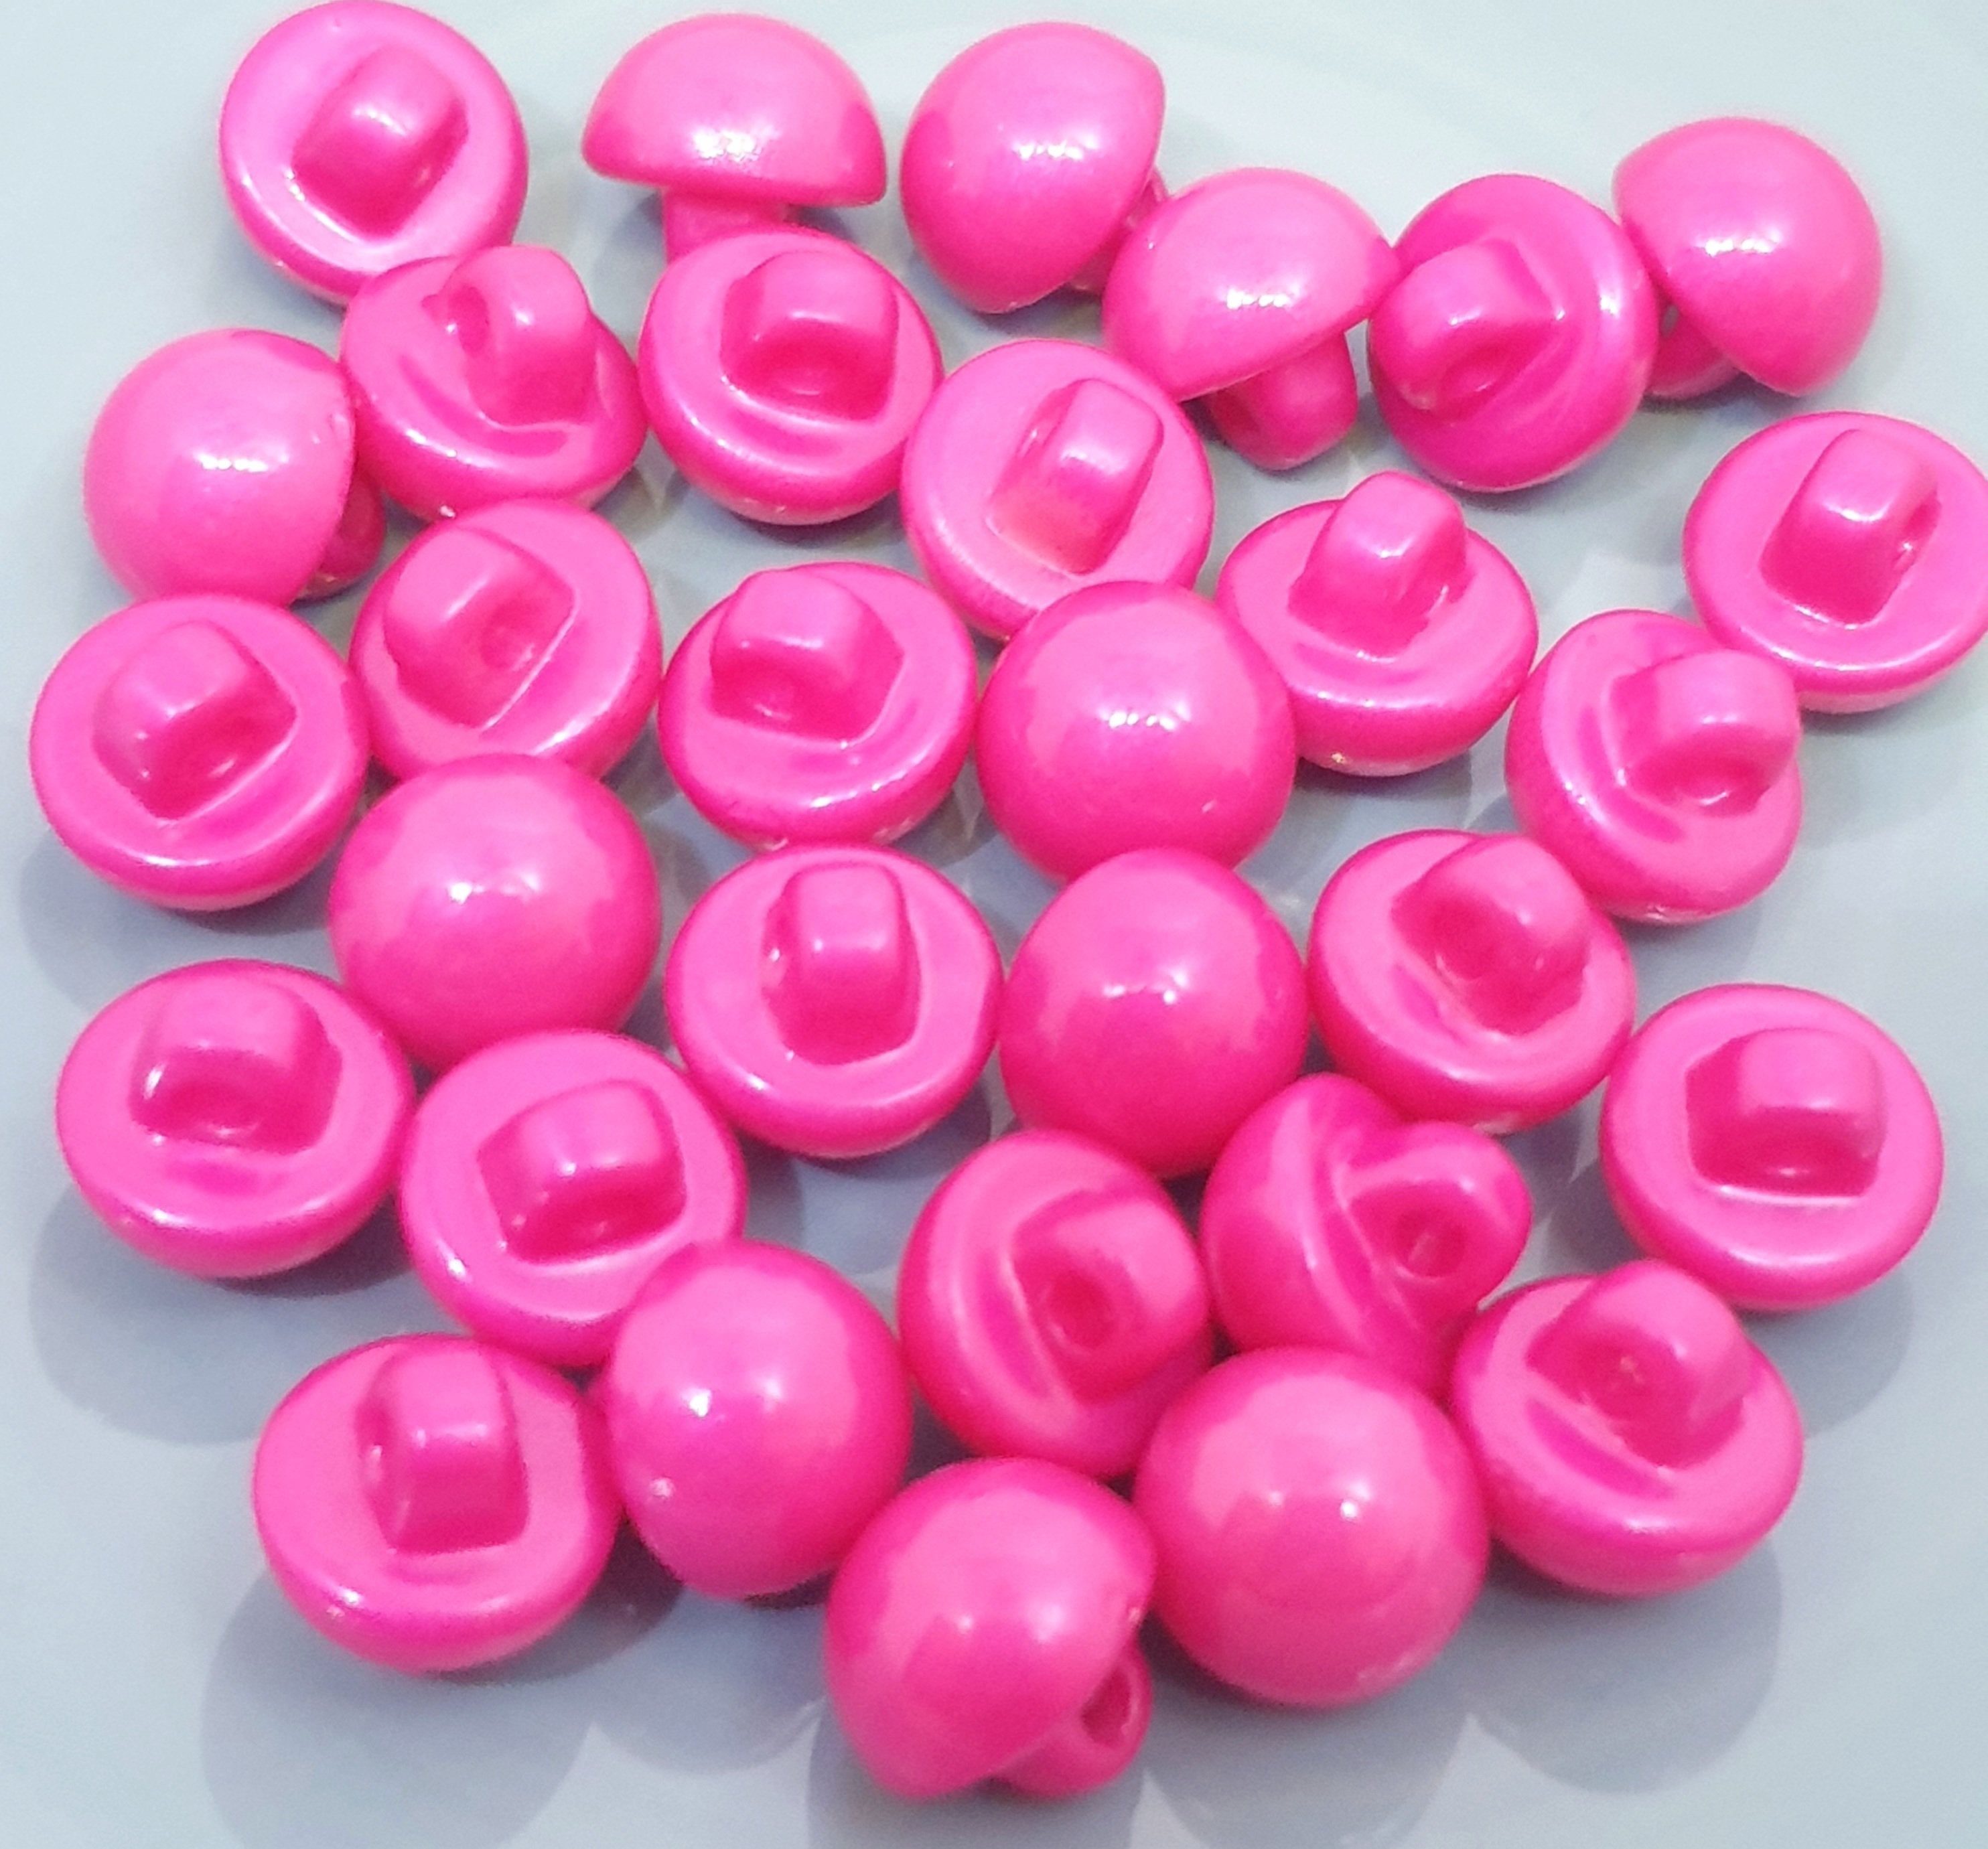 MajorCrafts 30pcs 10mm Dark Pink High-Grade Acrylic Small Round Sewing Mushroom Shank Buttons